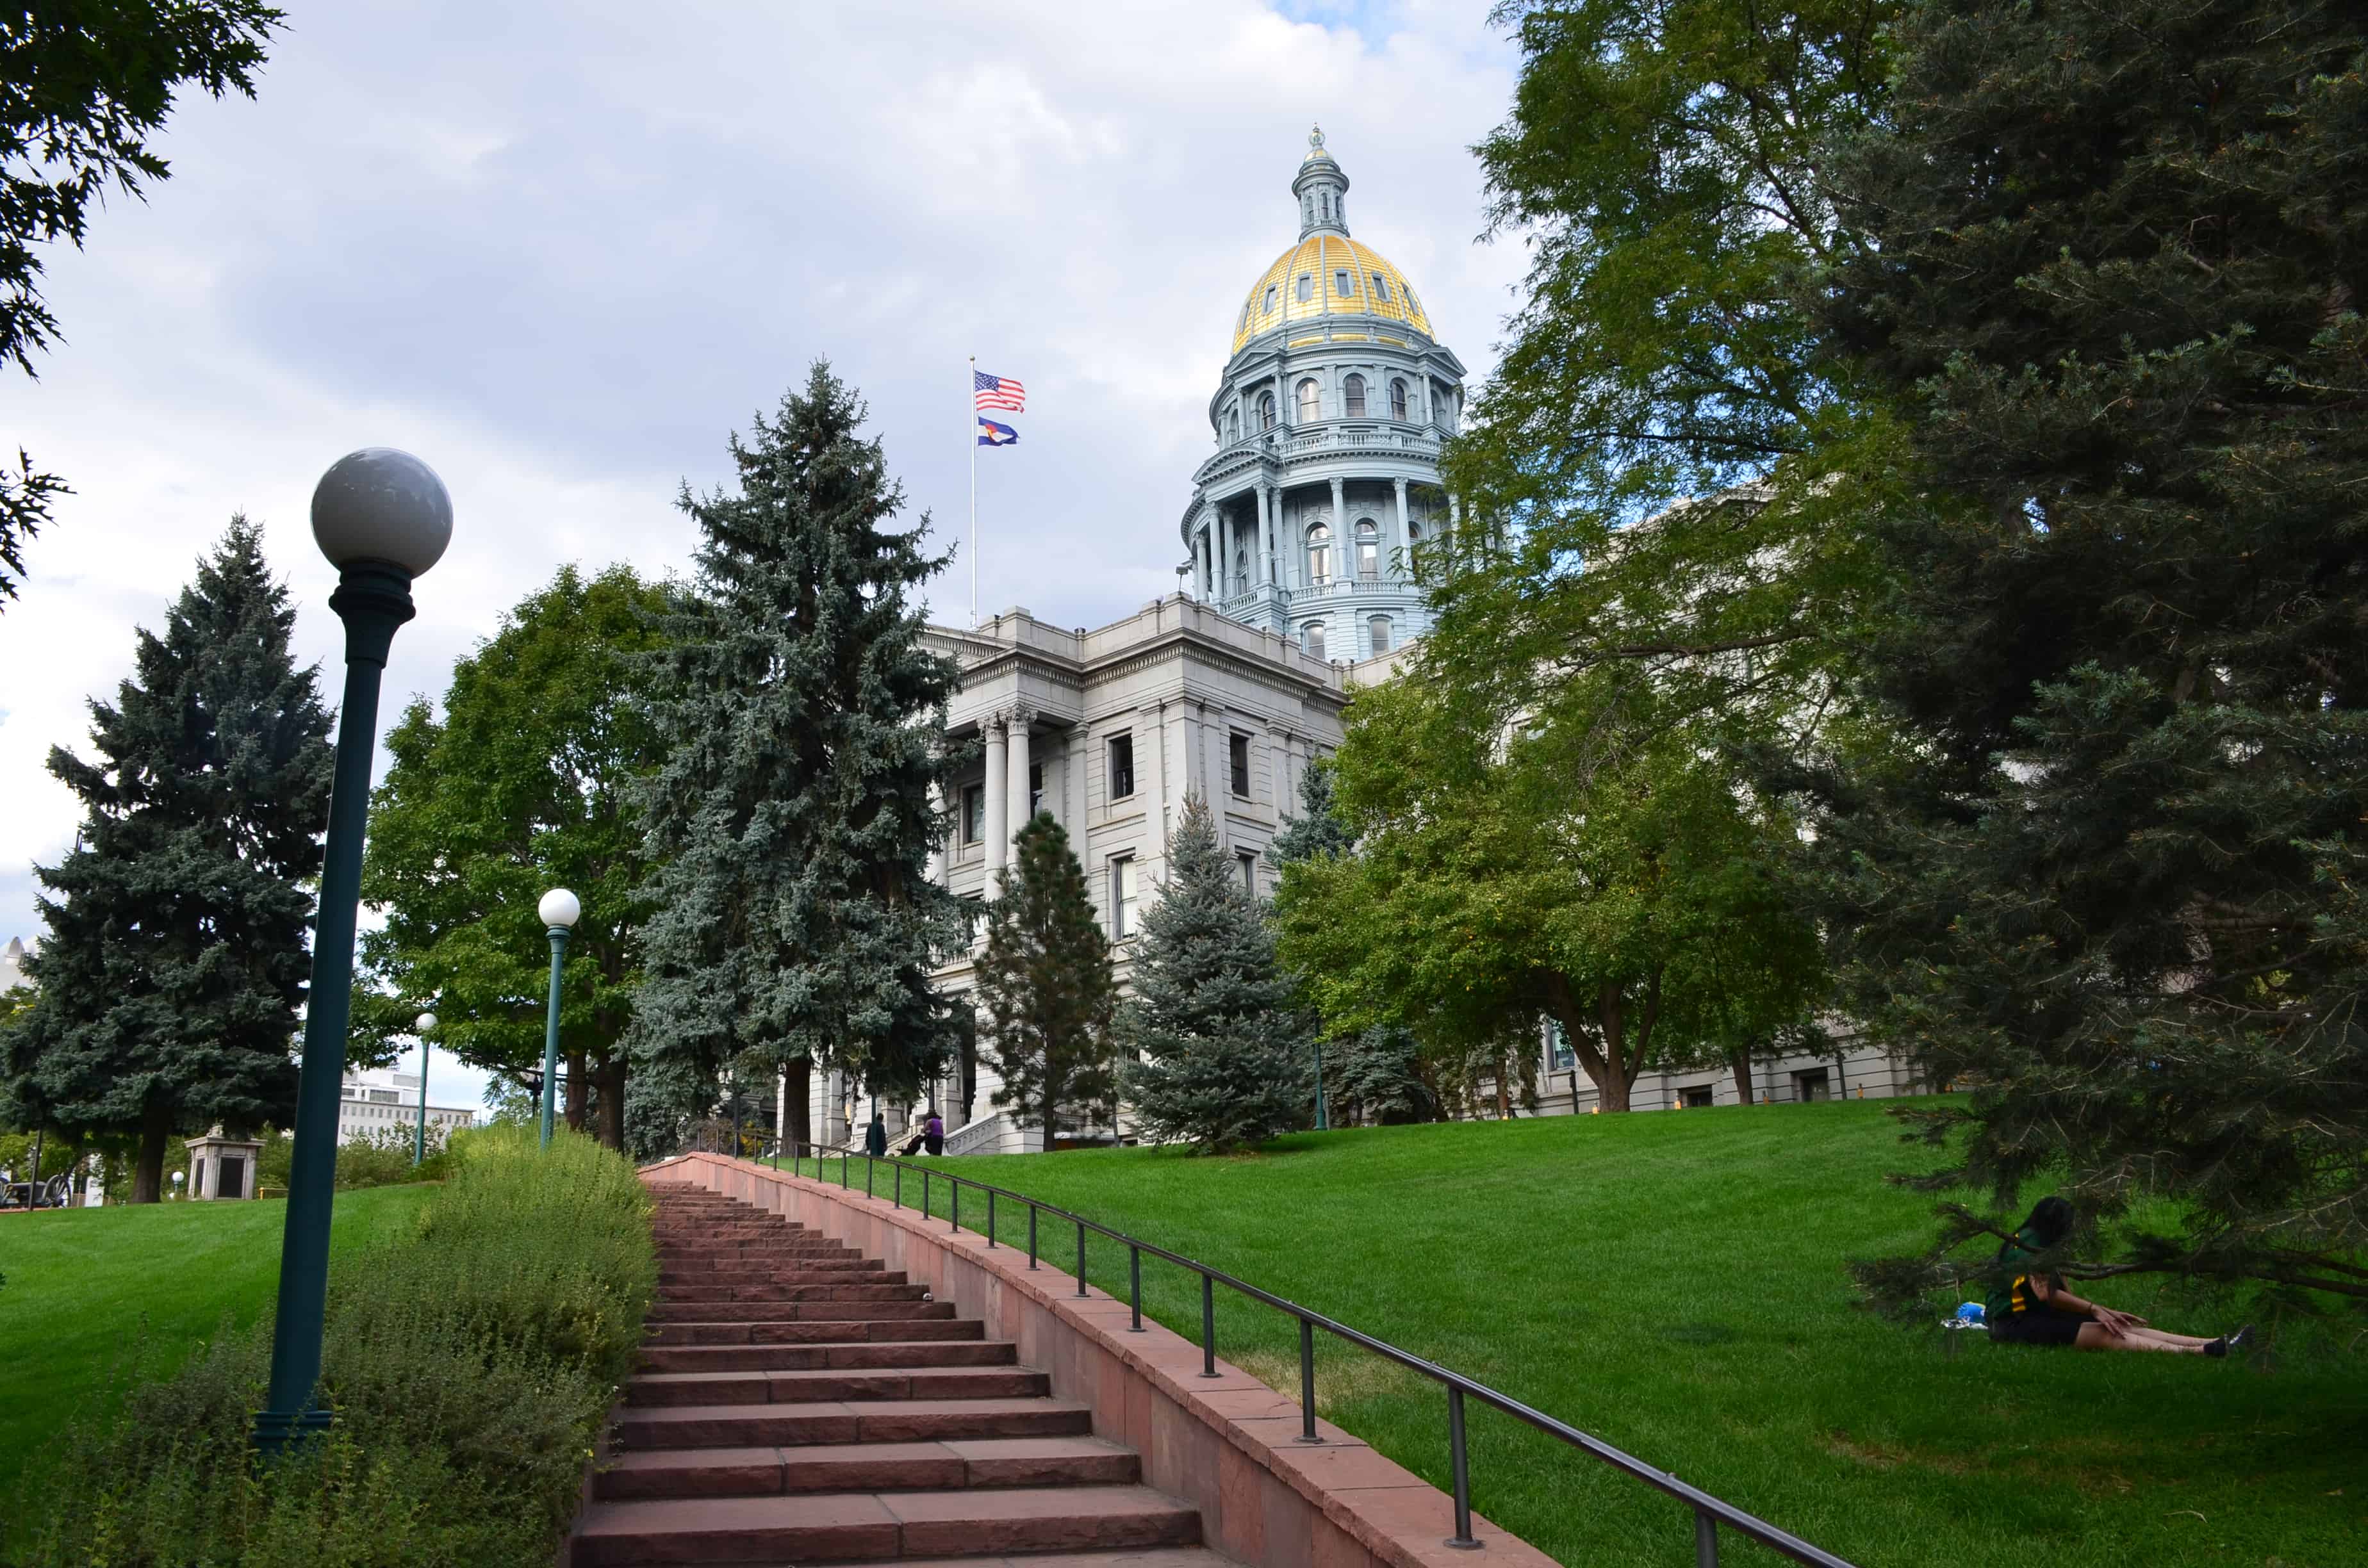 Colorado State Capitol in Denver